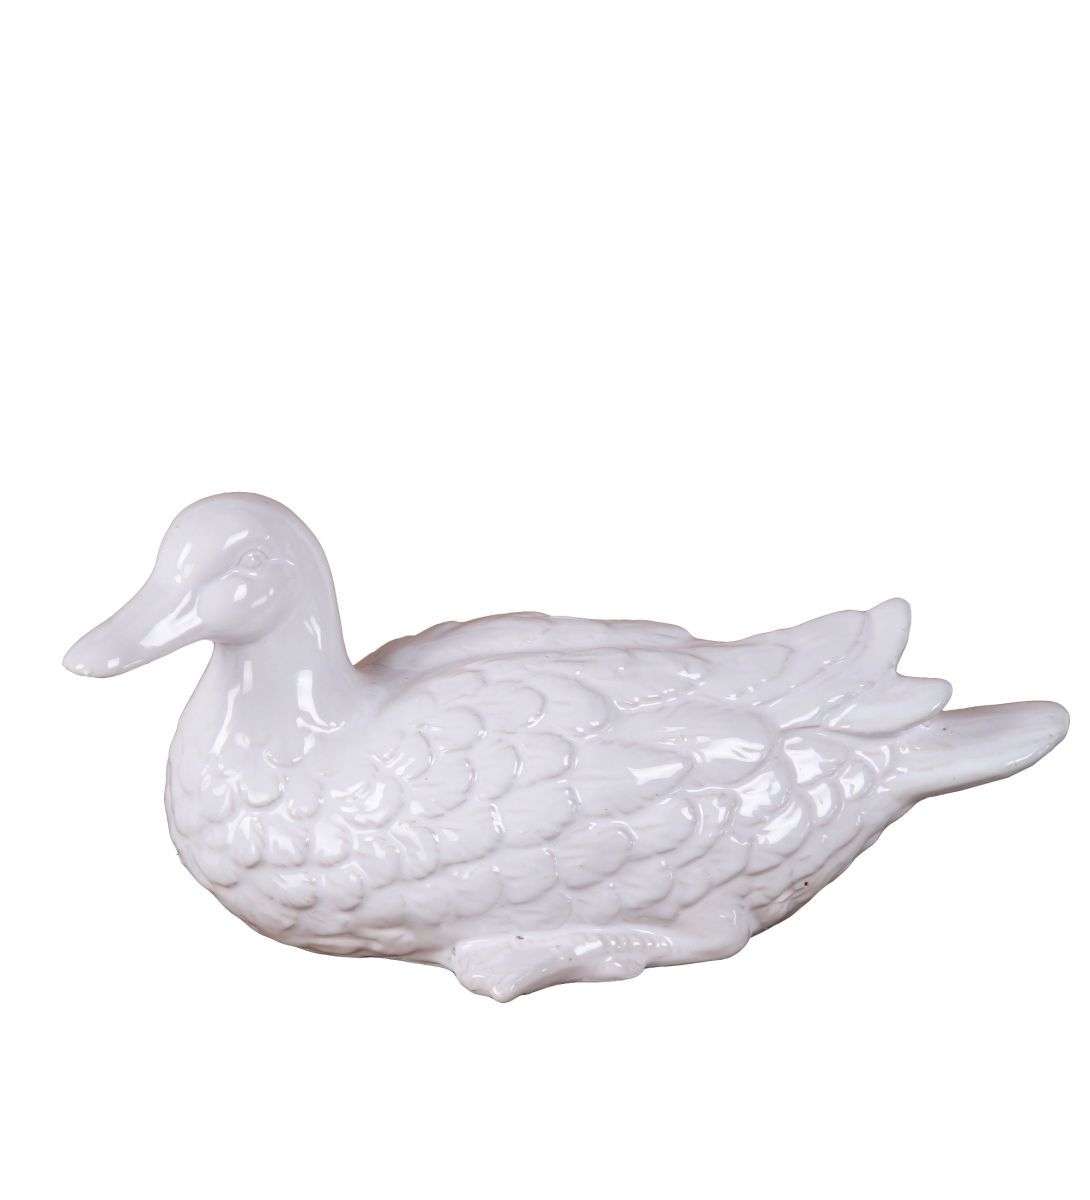 20301 11 X 5 X 5 In. Traditional Ceramic Duck Statue, White